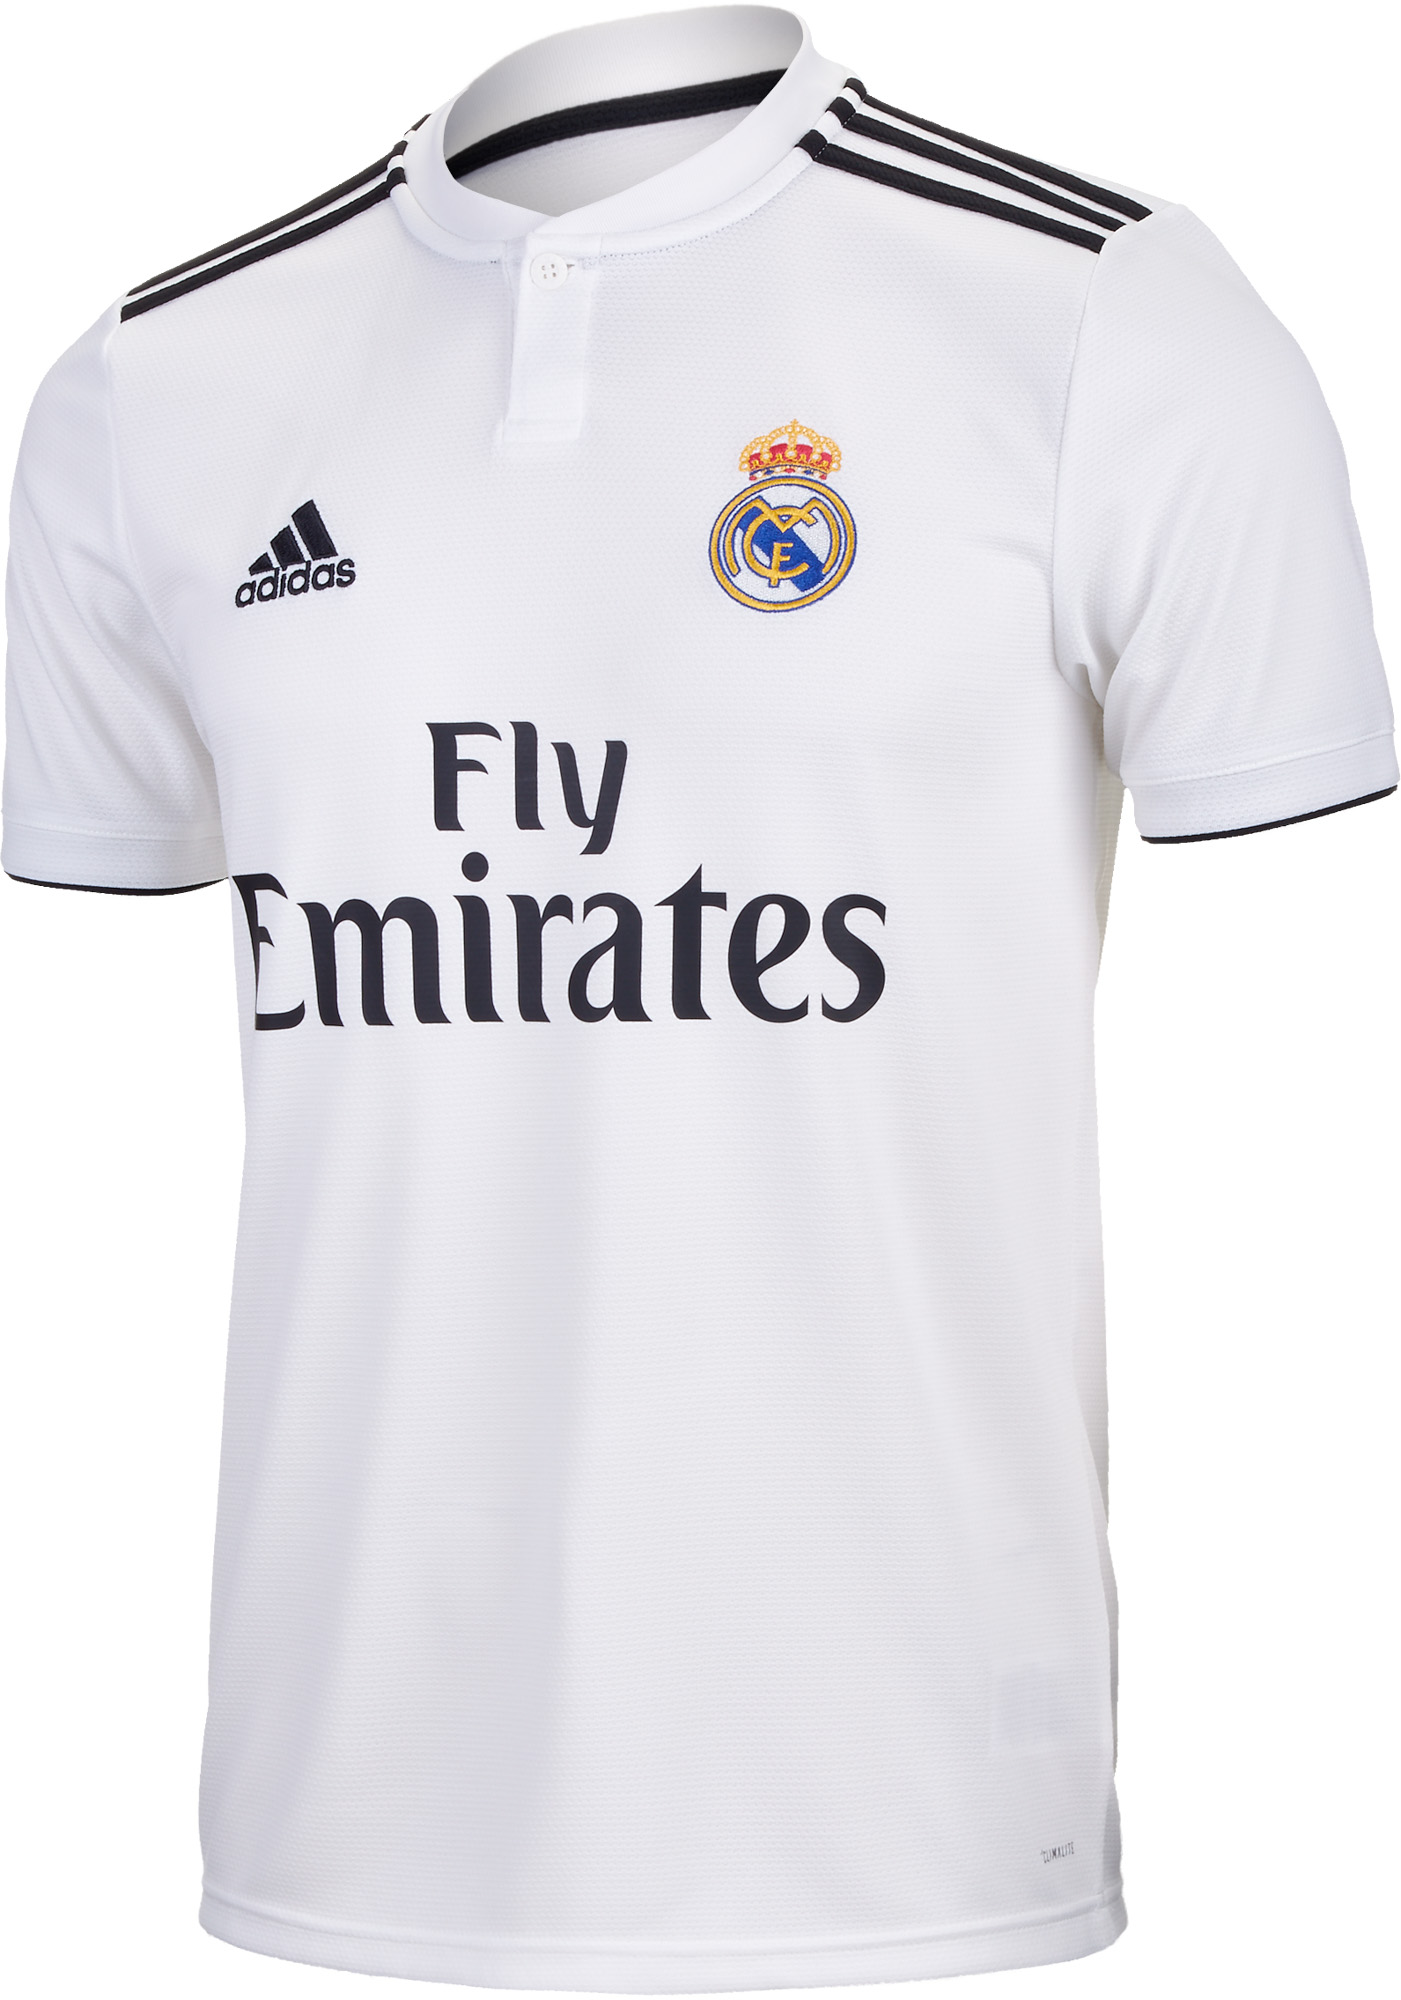 Kids 2018/19 adidas Real Madrid Away Jersey - Soccer Master